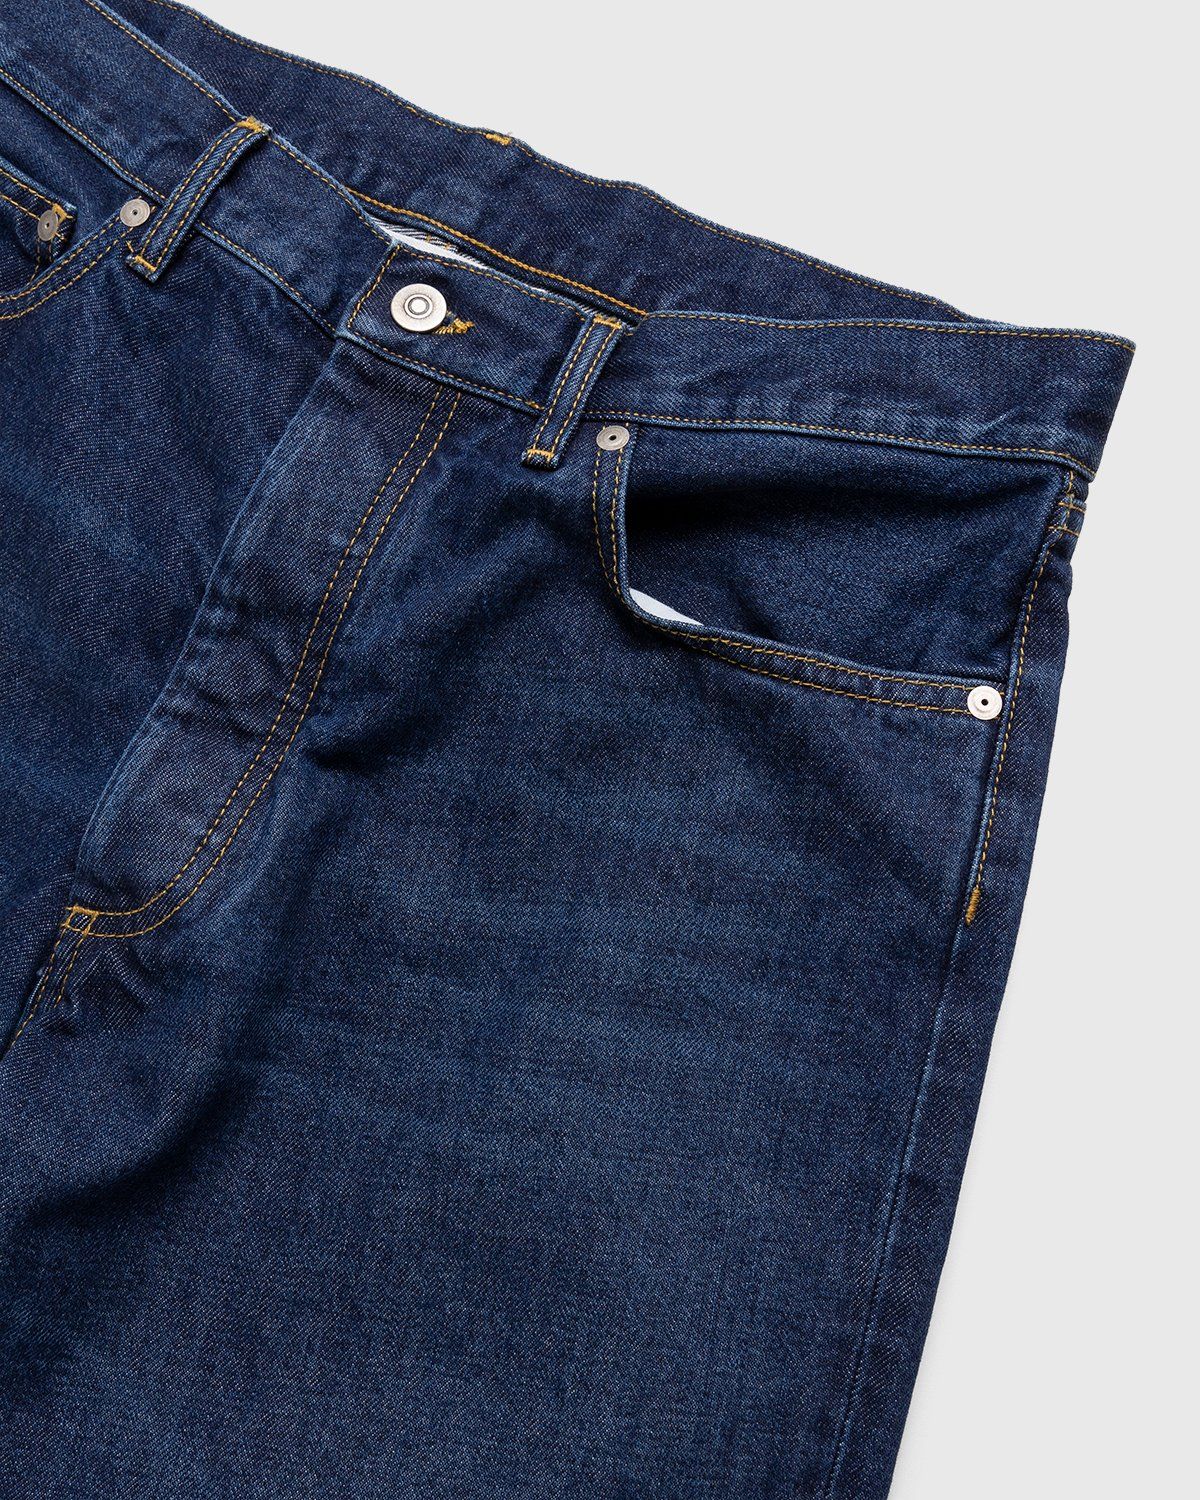 Maison Margiela – 5 Pocket Jeans Blue | Highsnobiety Shop